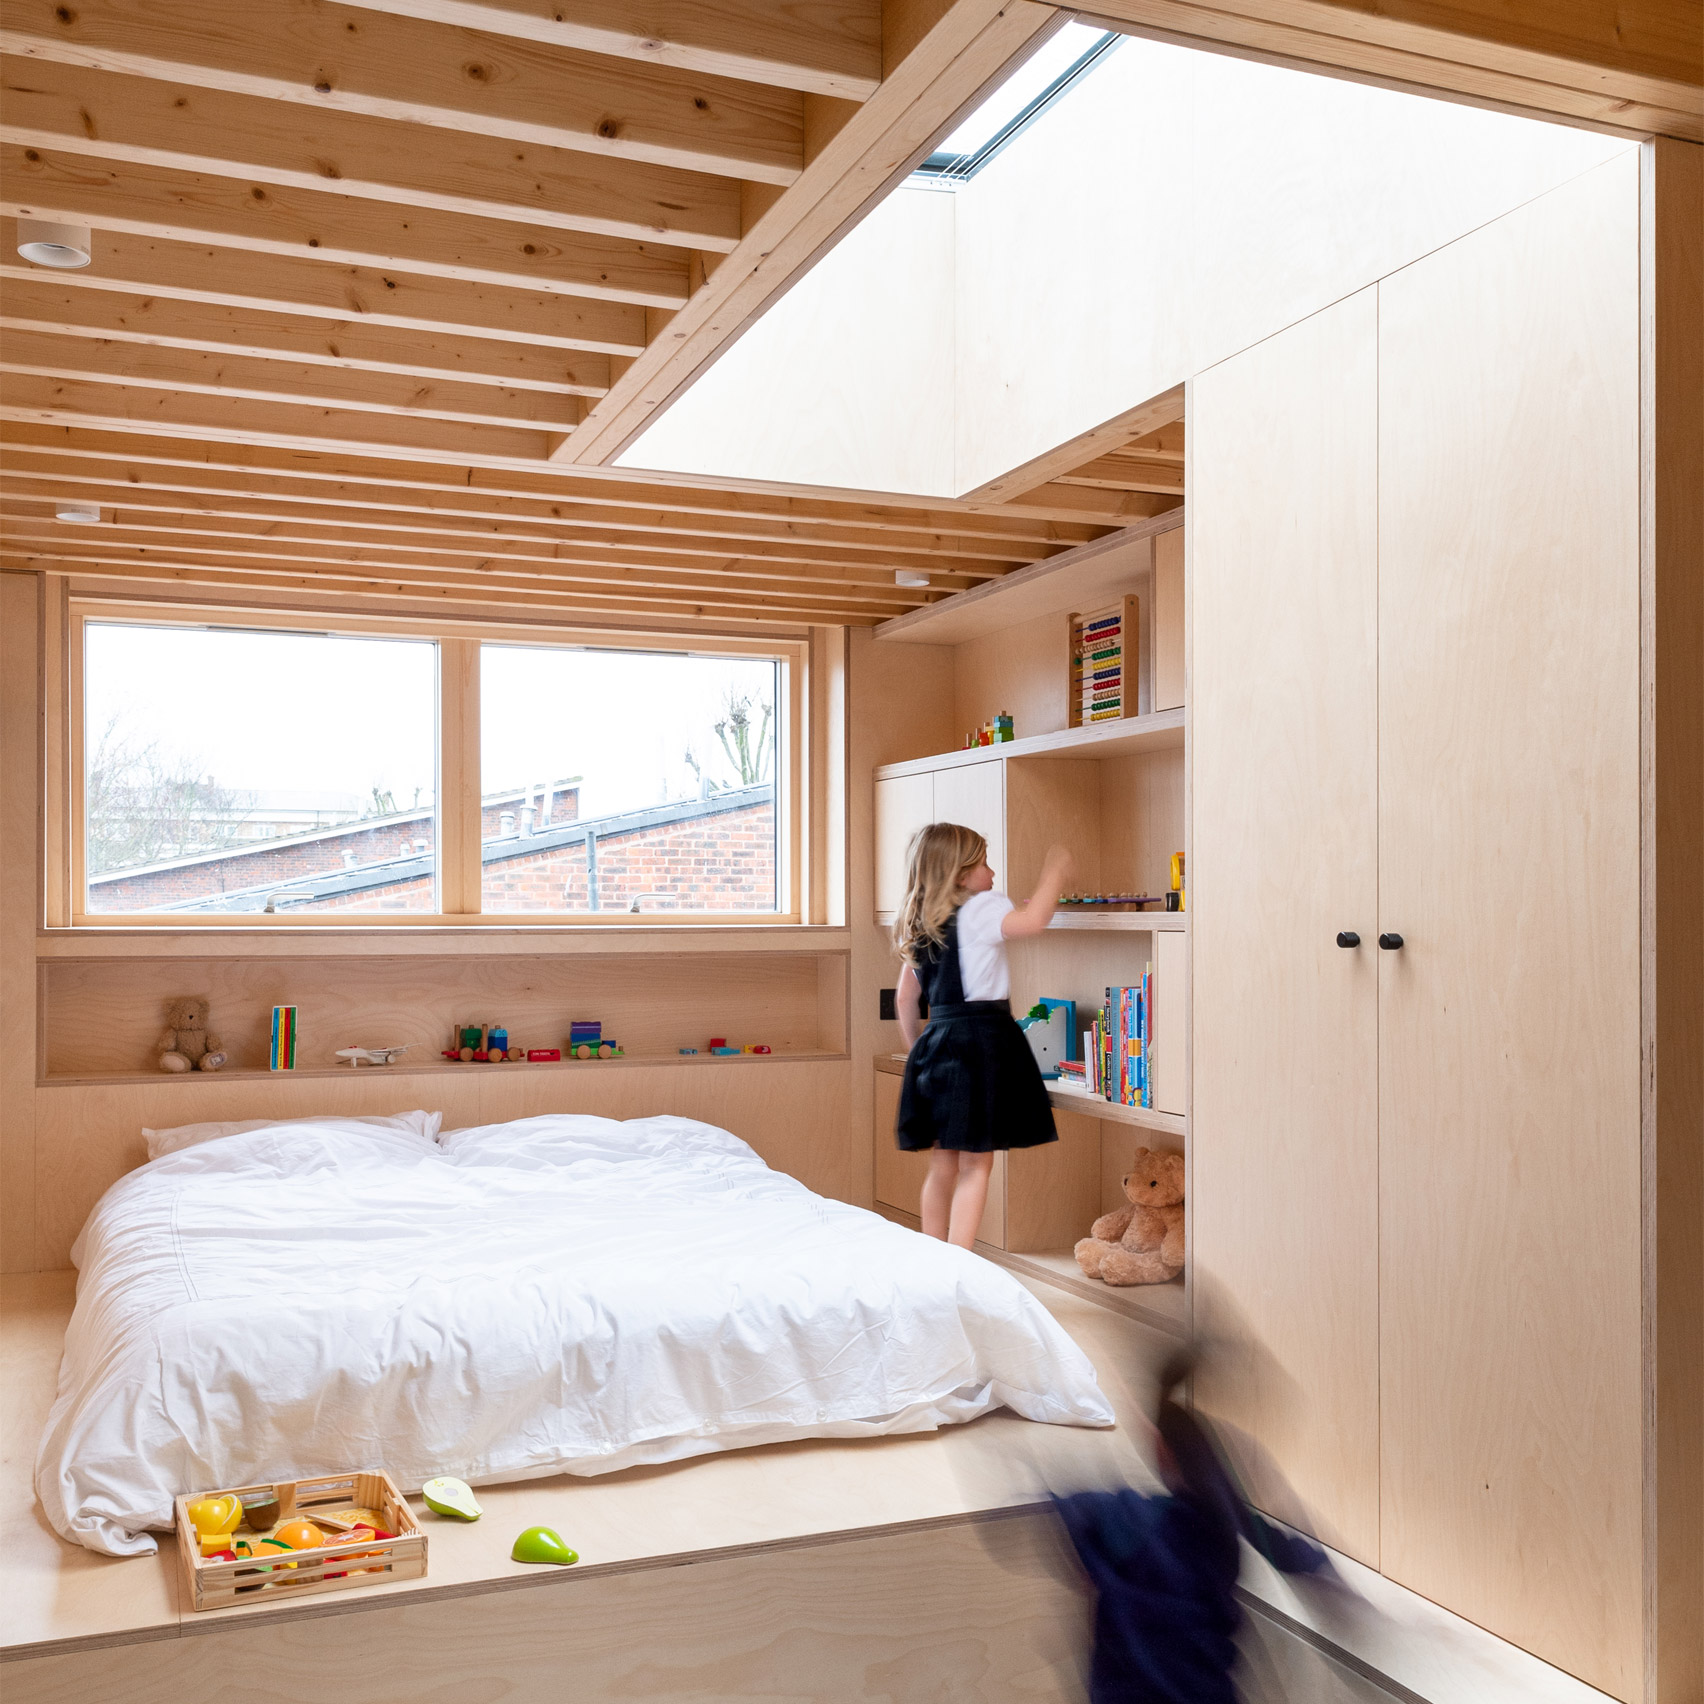 A wood-lined children's bedroom